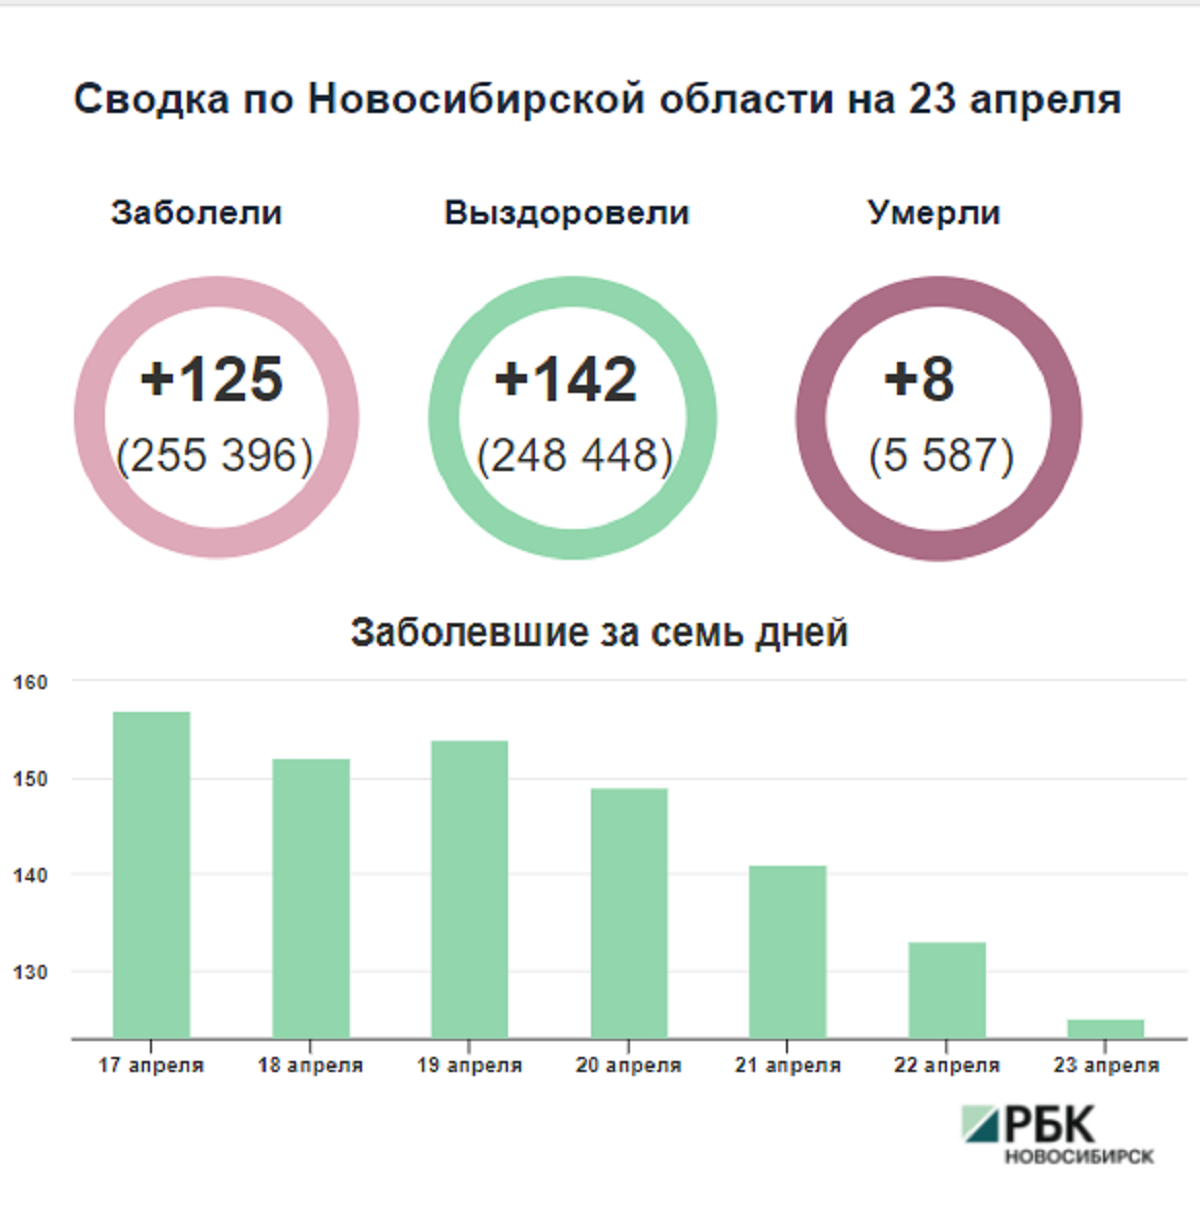 Коронавирус в Новосибирске: сводка на 23 апреля